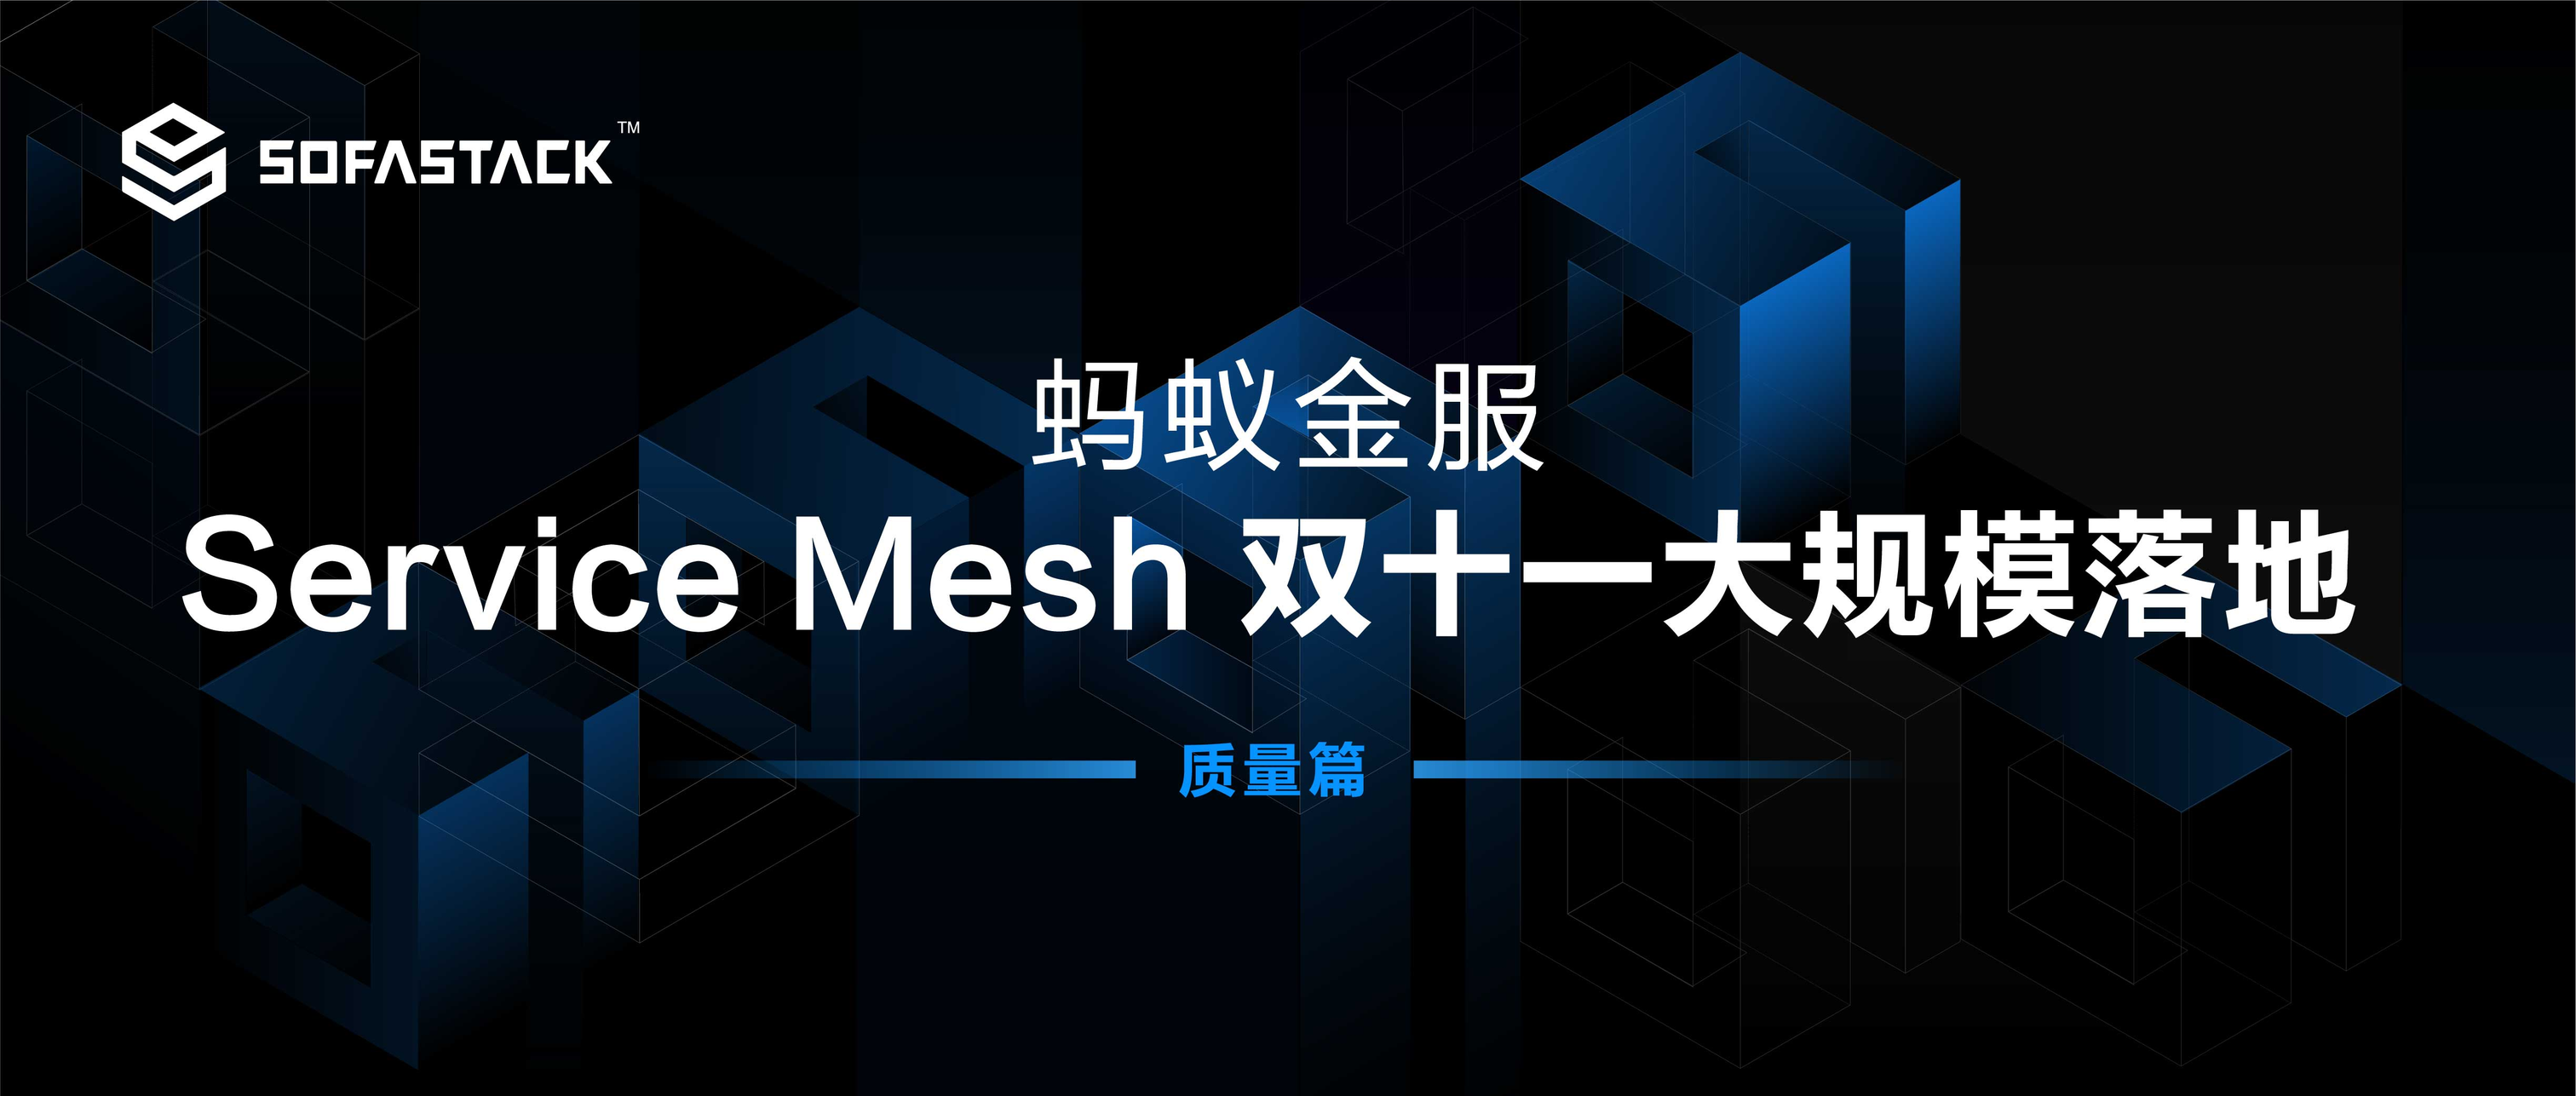 Service Mesh-质量篇-01.jpg